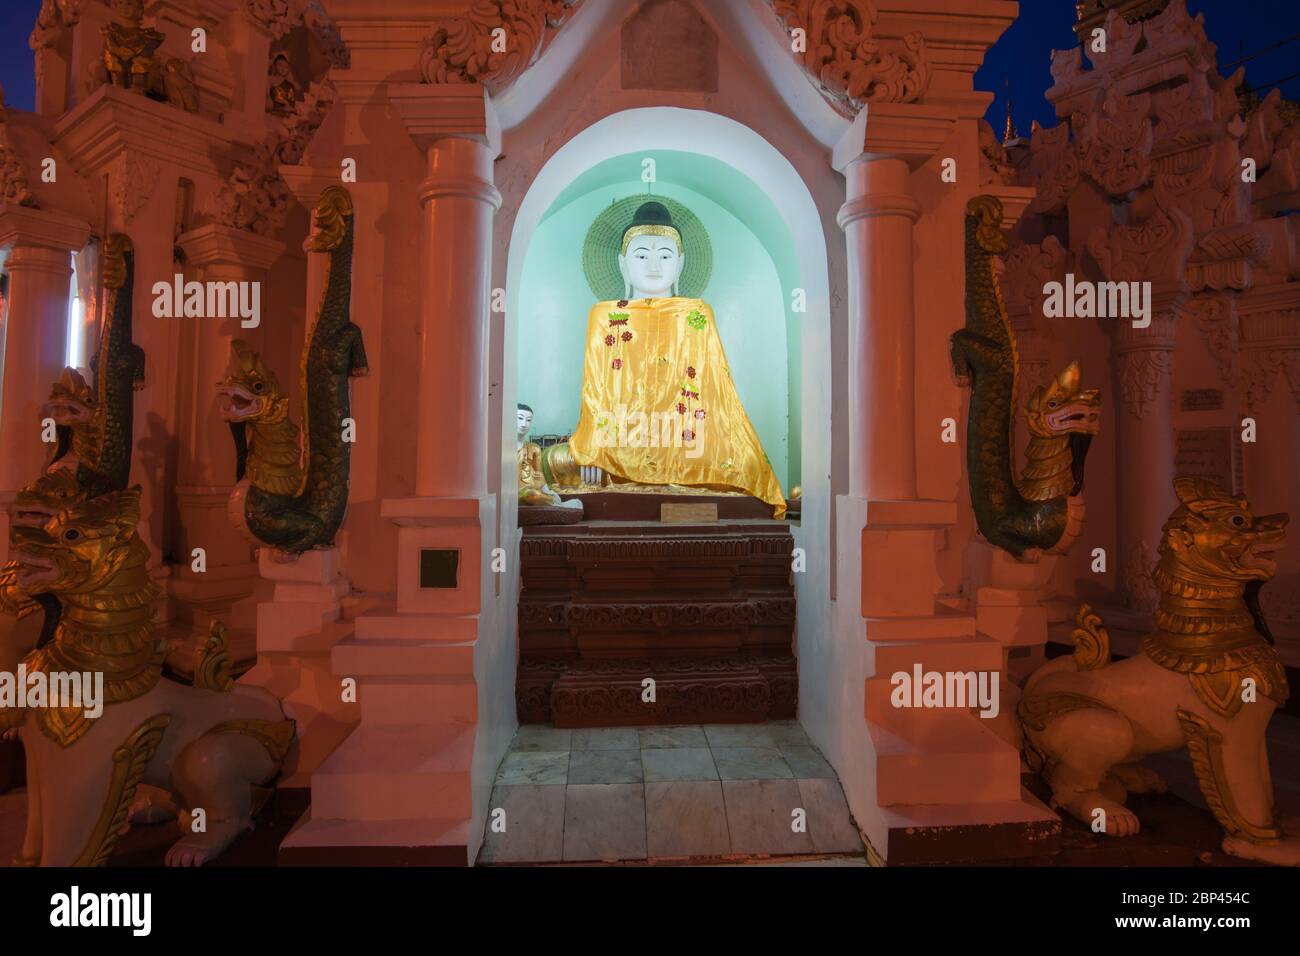 Myanmar travel  Statue or image of Buddha in golden robe in alcove at Shwedagon Pagoda in Yangon, Myanmar. Stock Photo